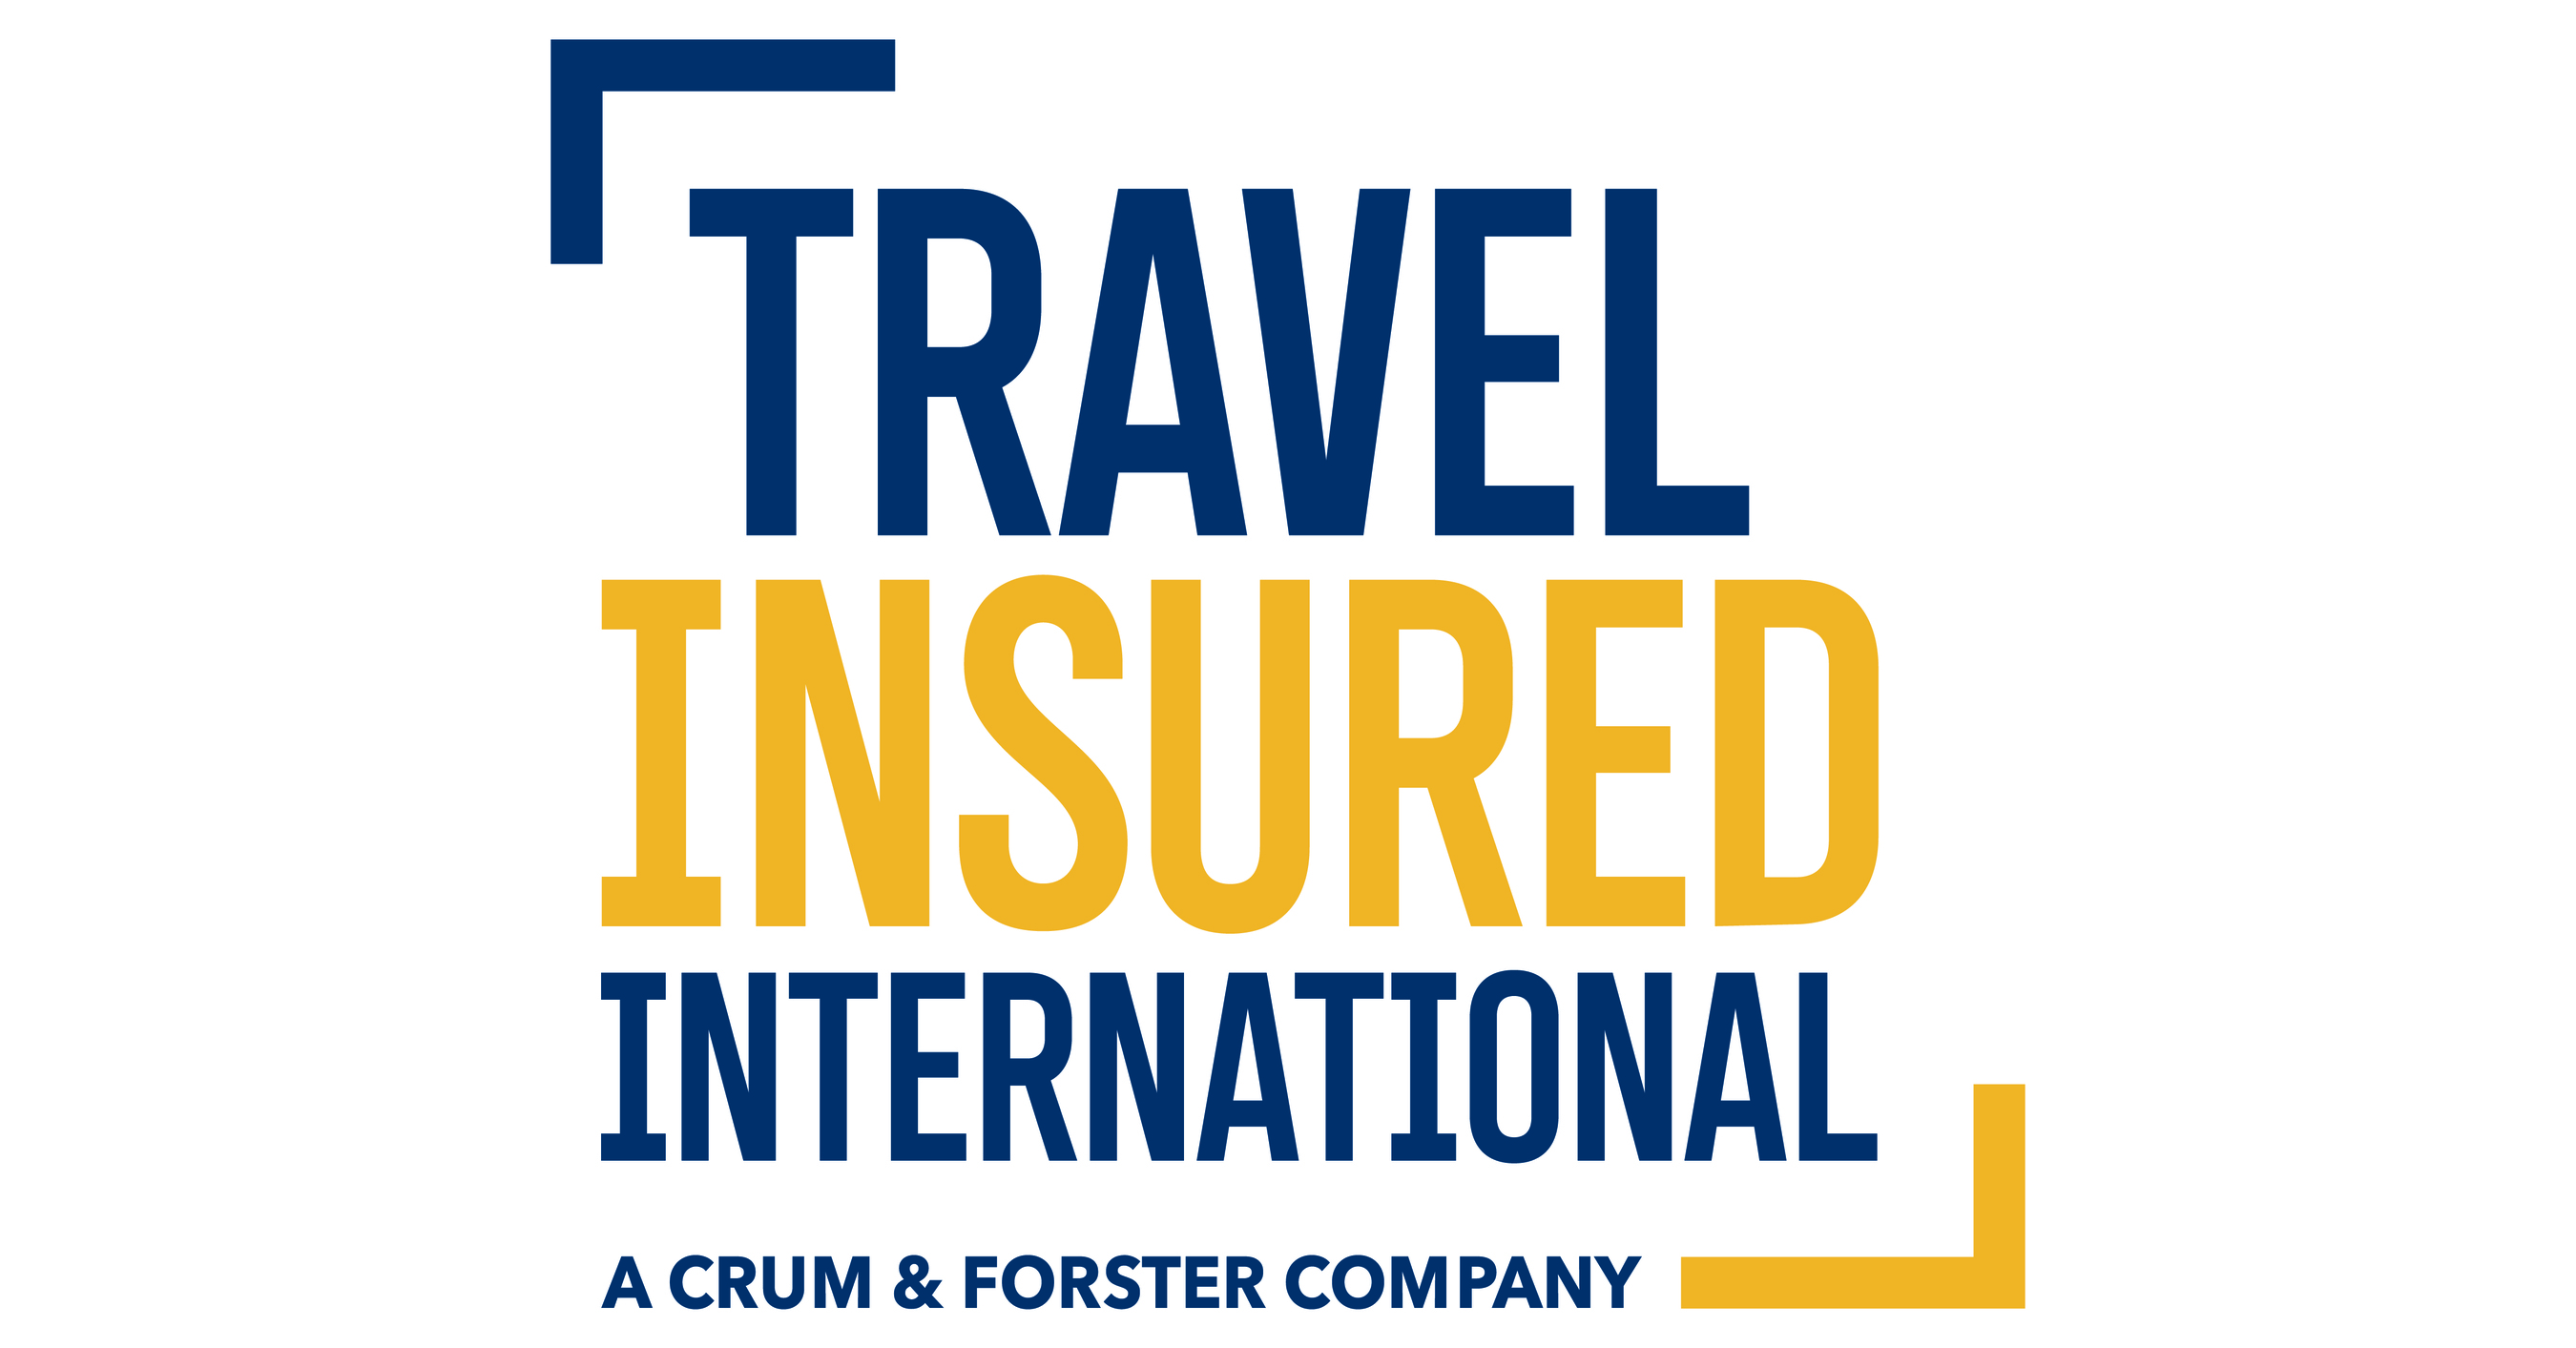 c&f travel insured international reviews